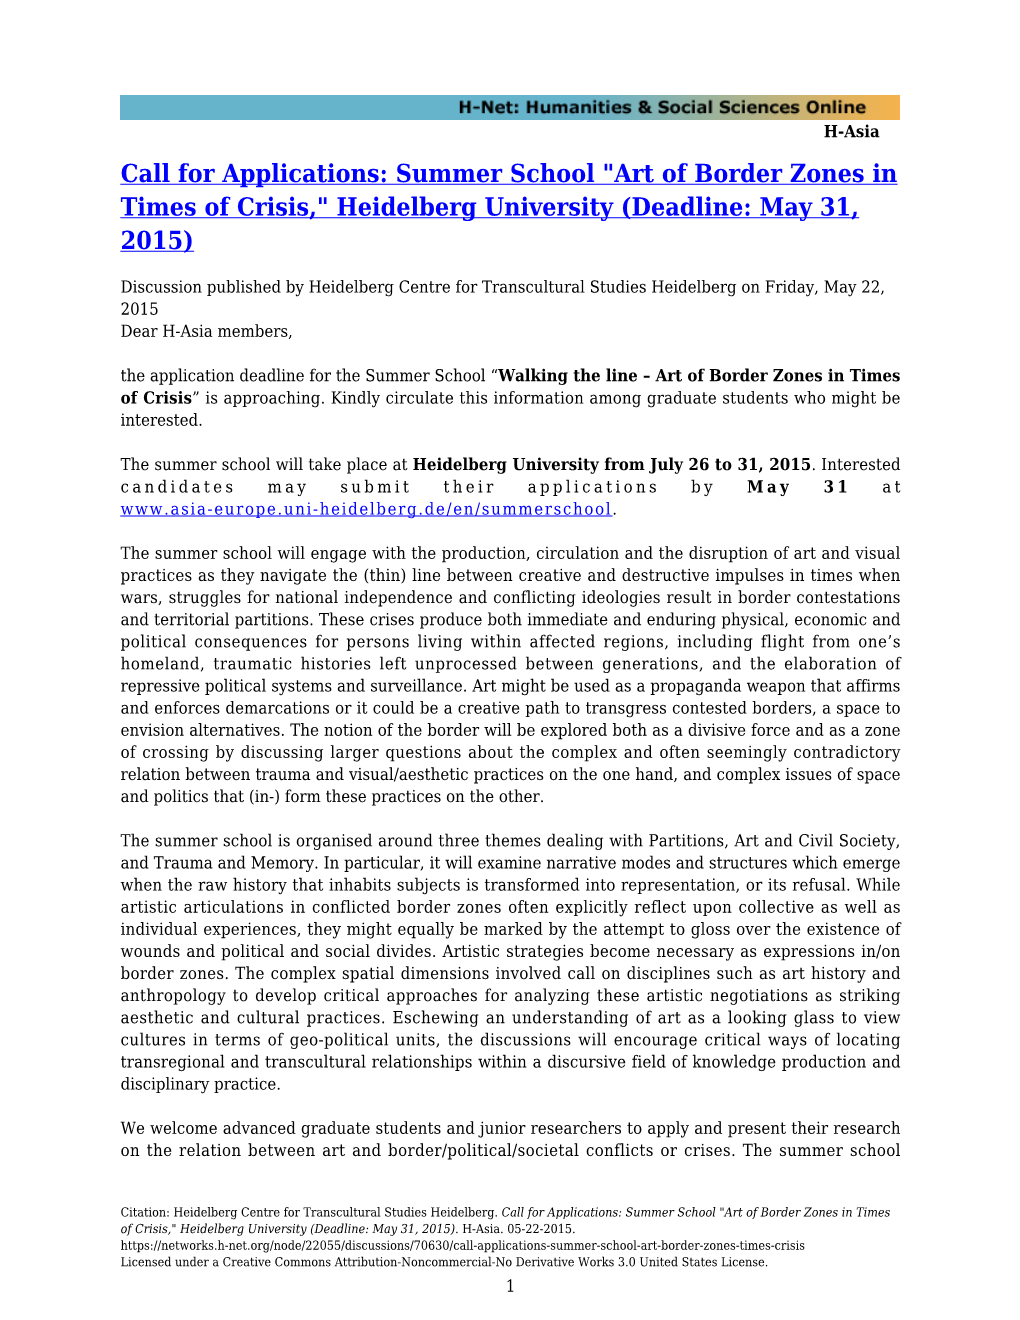 Heidelberg University (Deadline: May 31, 2015)